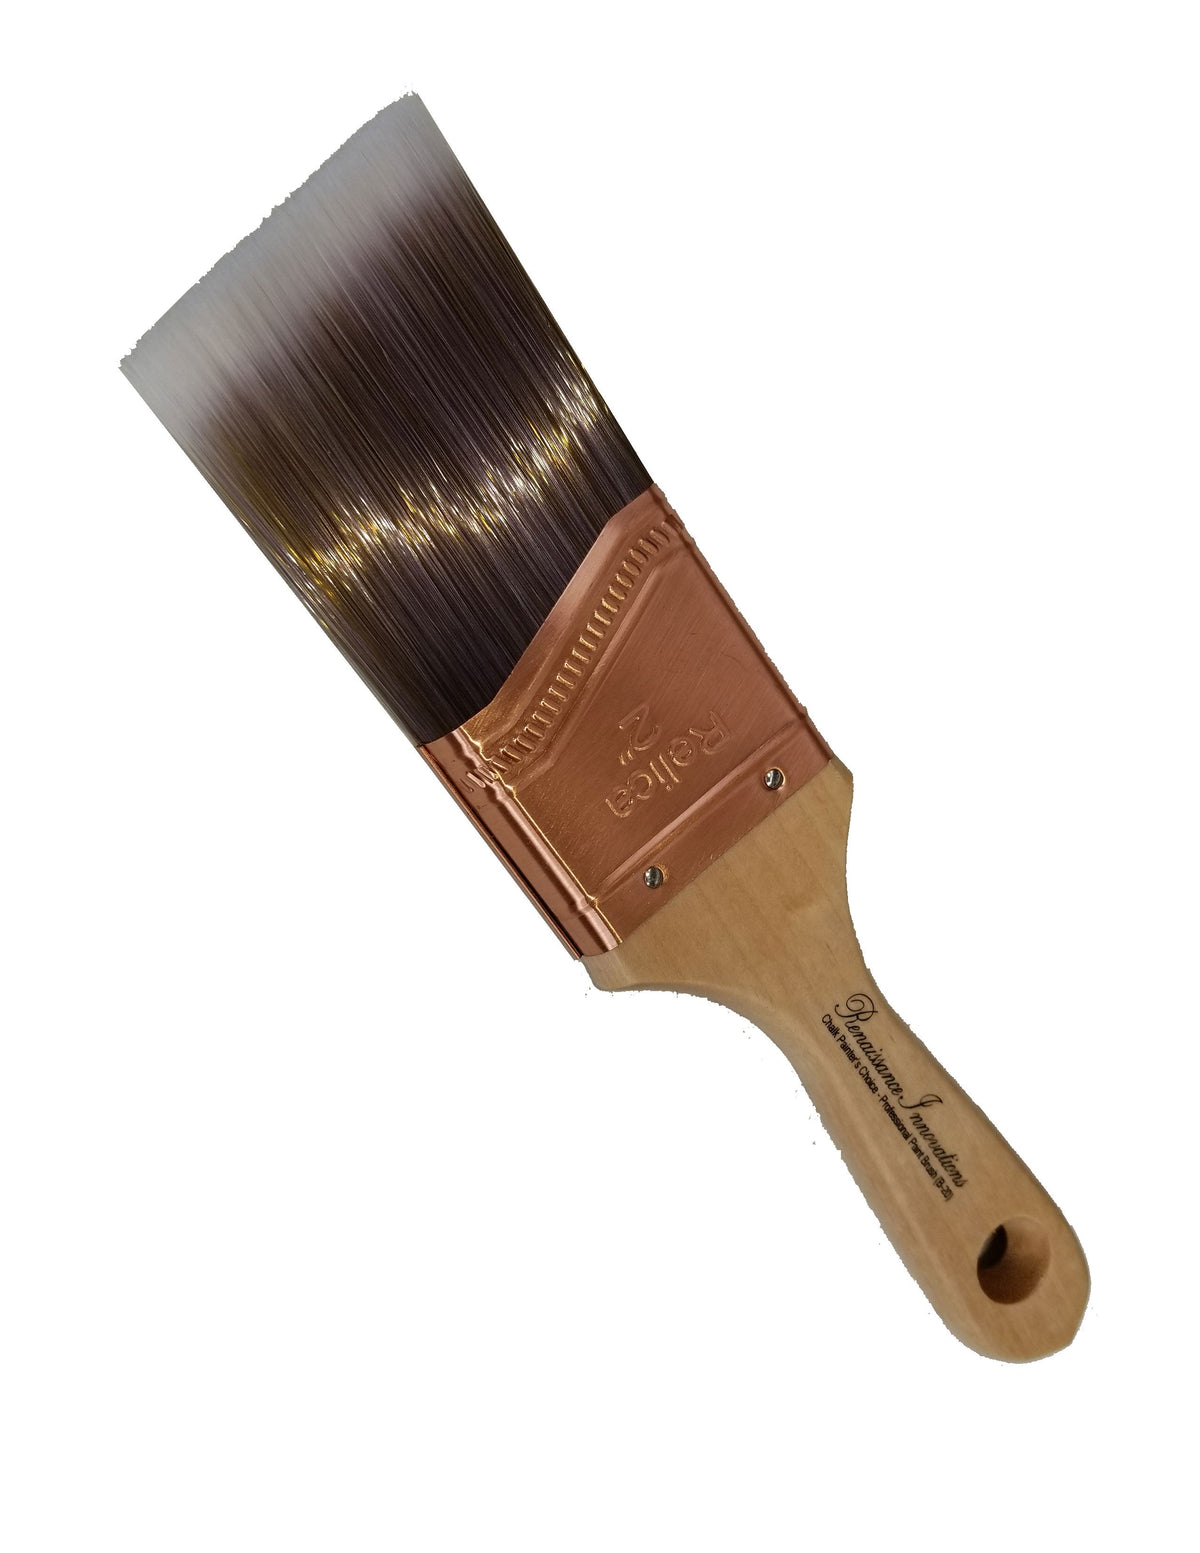 2" Professional Paint Brush